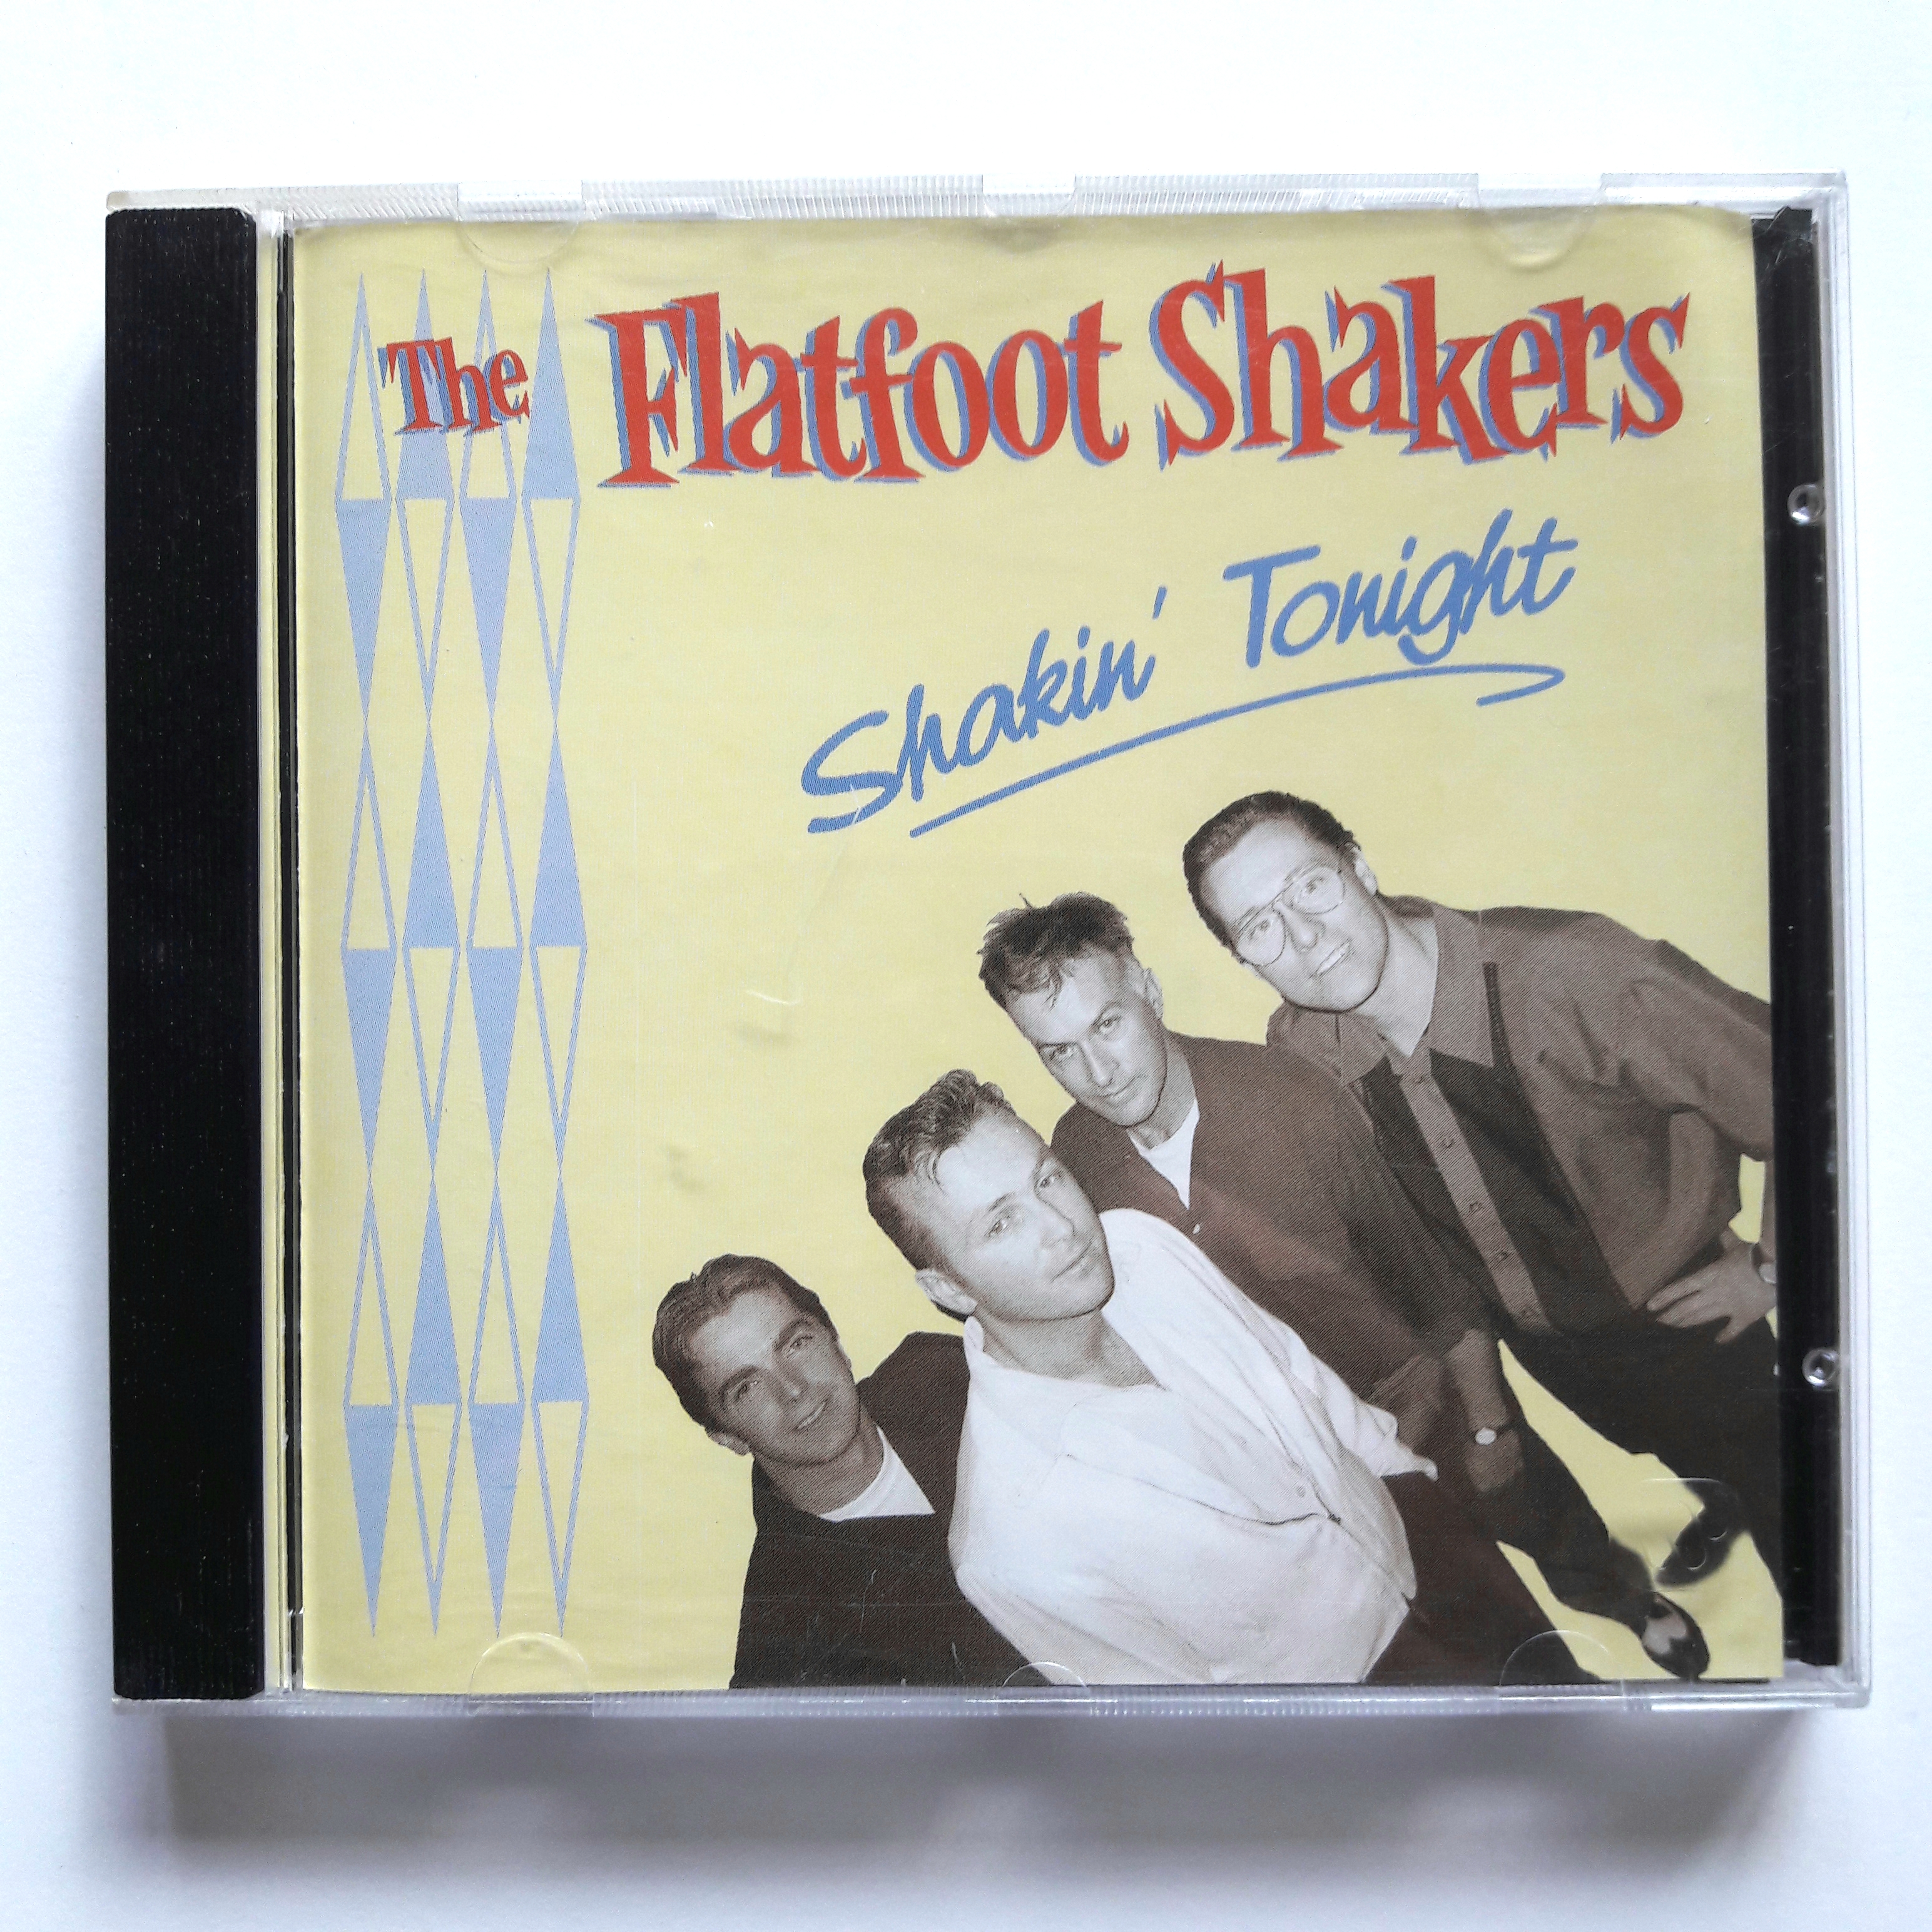 The Flatfoot Shakers - Shakin' Tonight